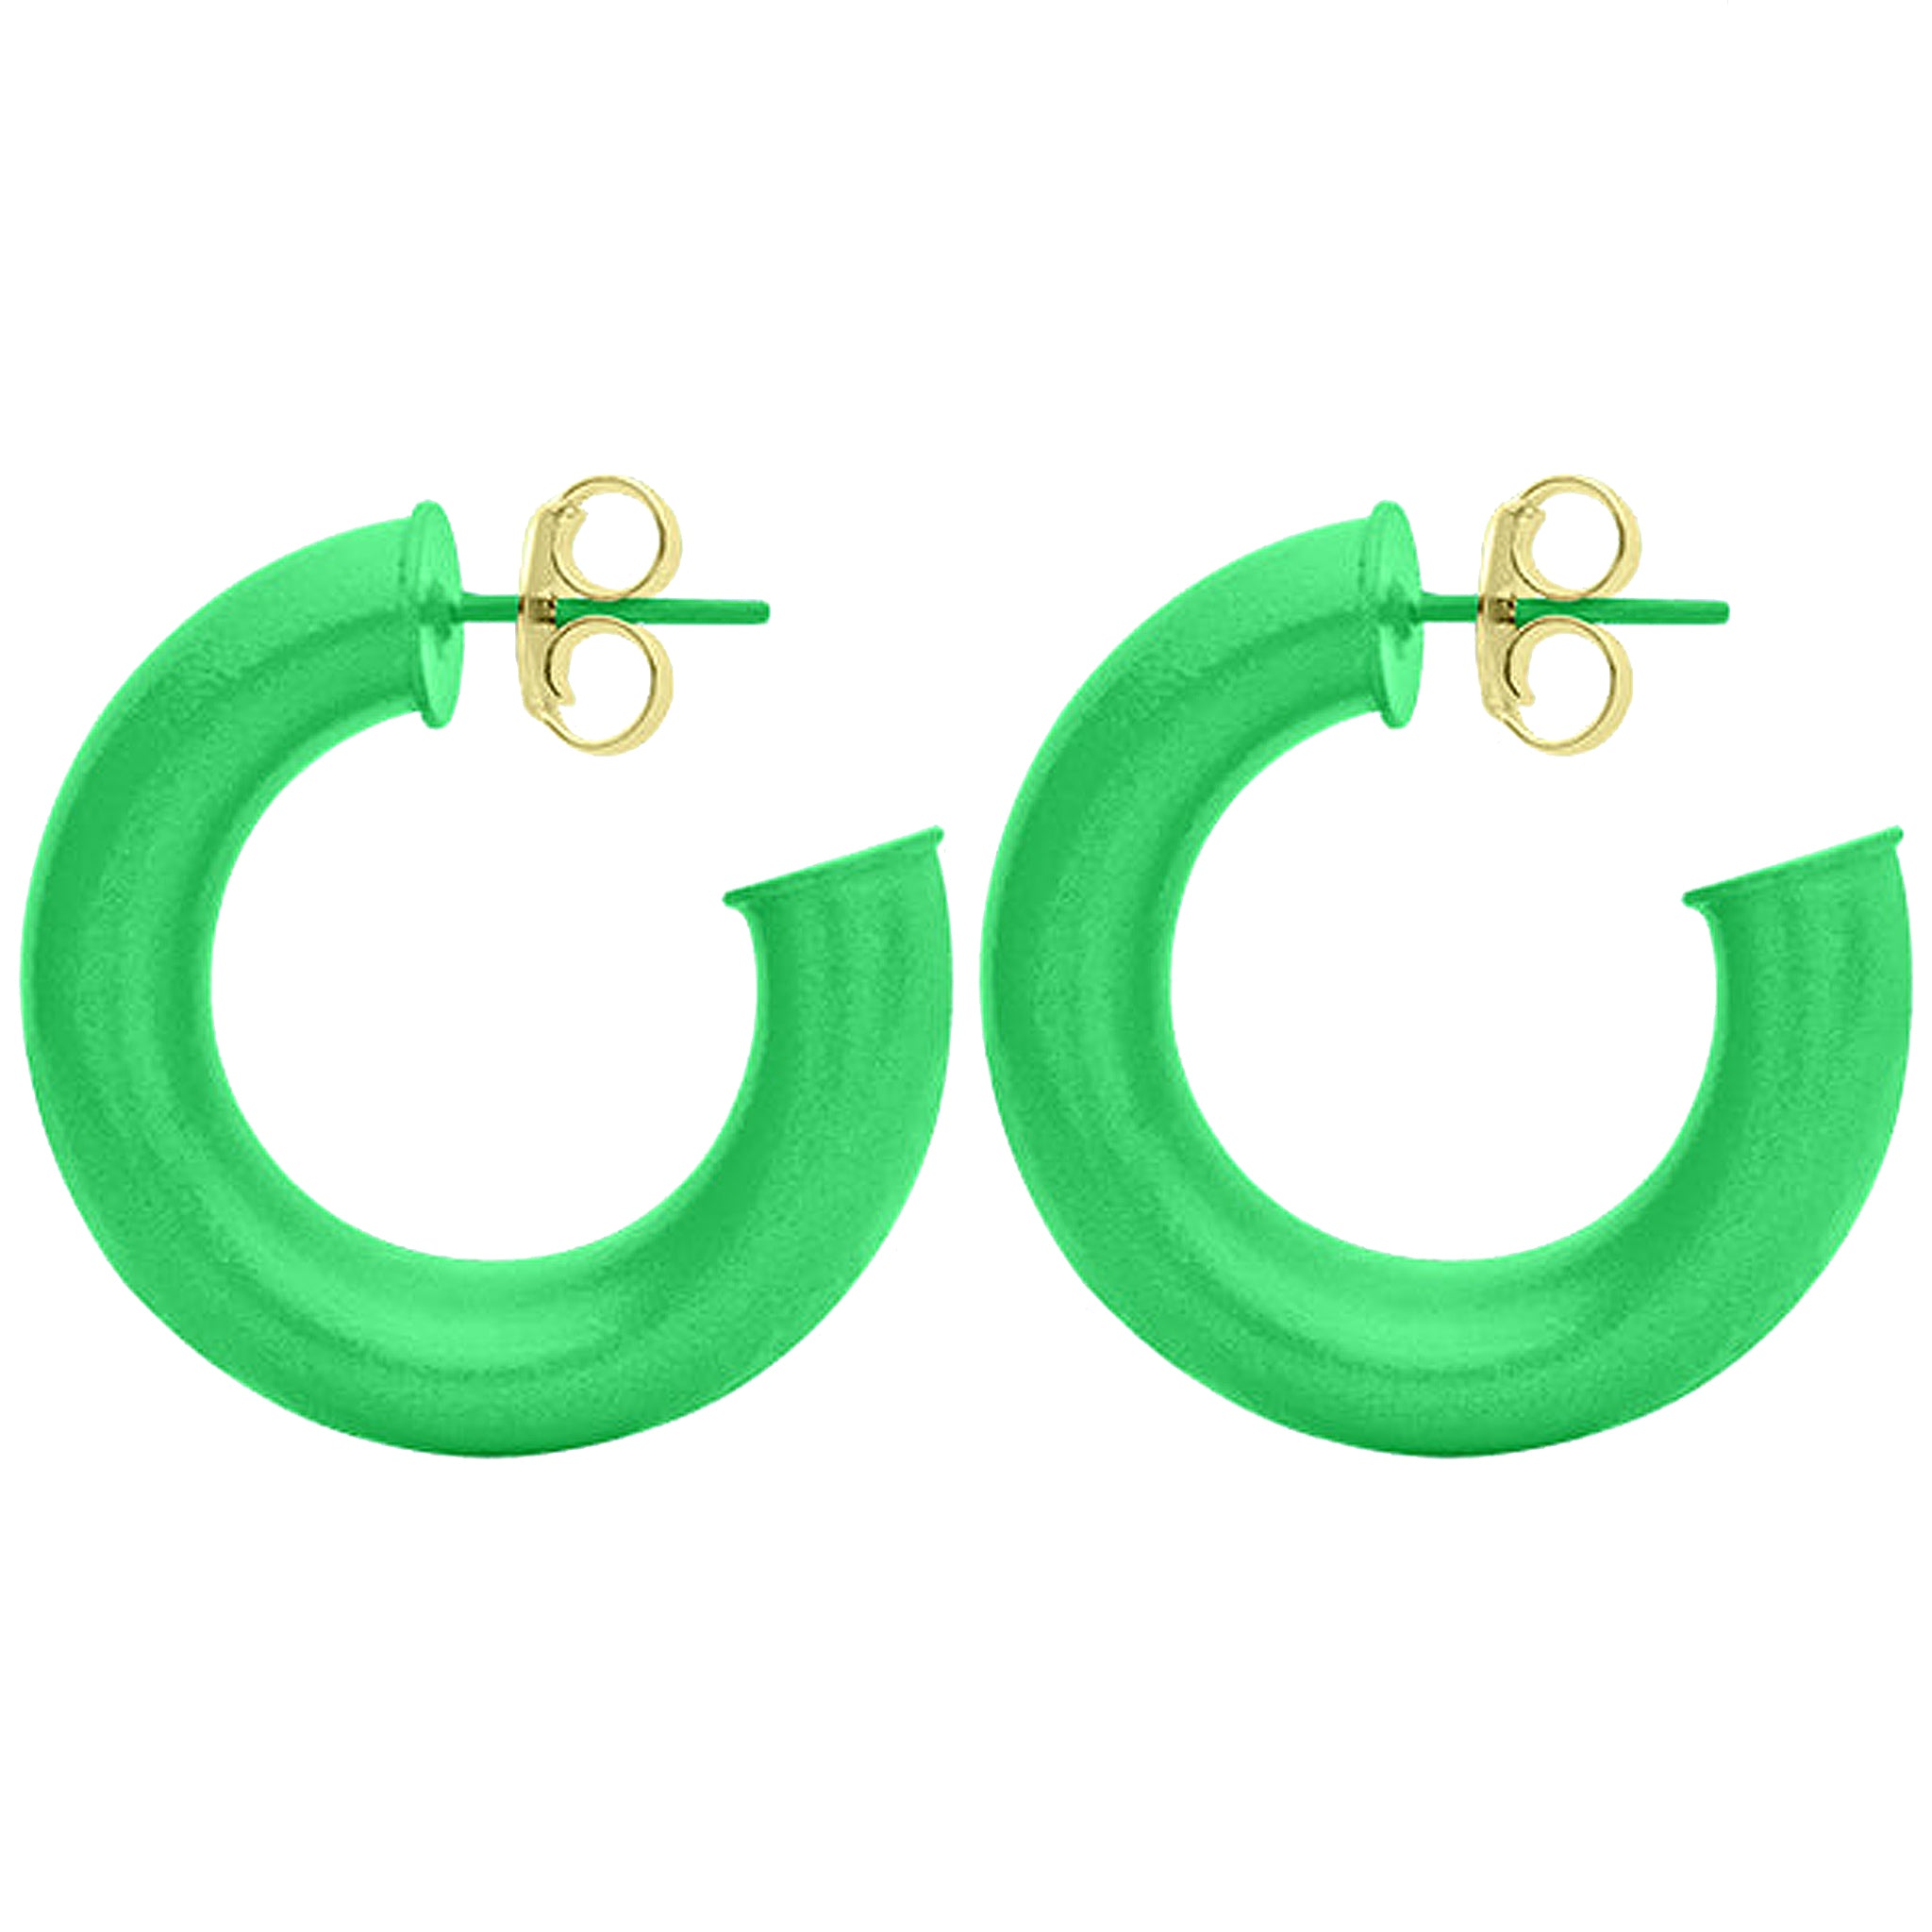 Sheila Fajl Thick Small Chantal Hoop Earrings in Painted Medium Green